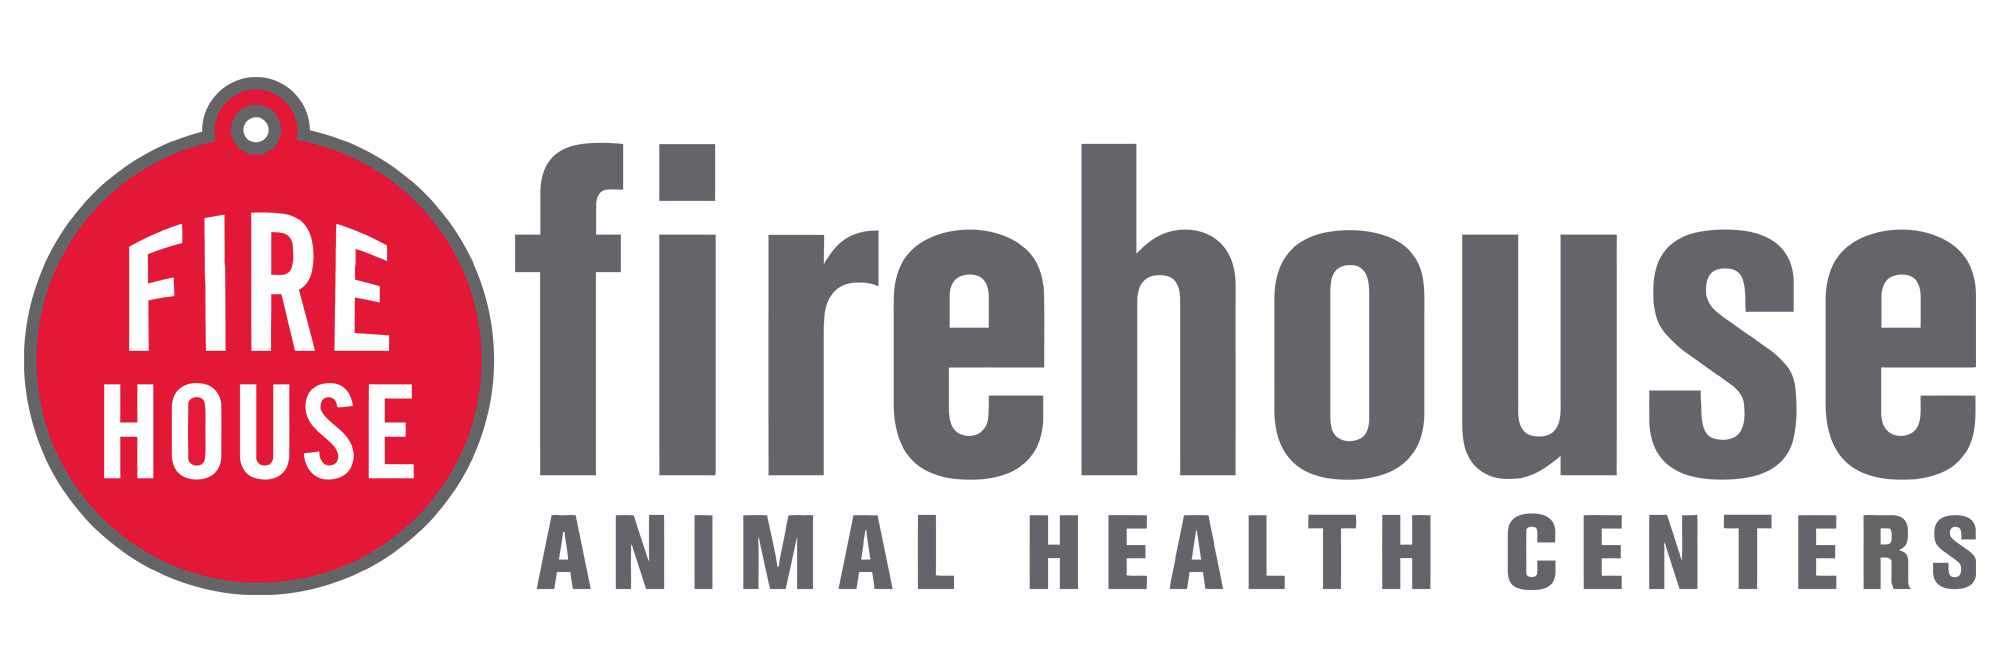 Best Veterinary Hospitals In Texas - Firehouse Animal Health Center